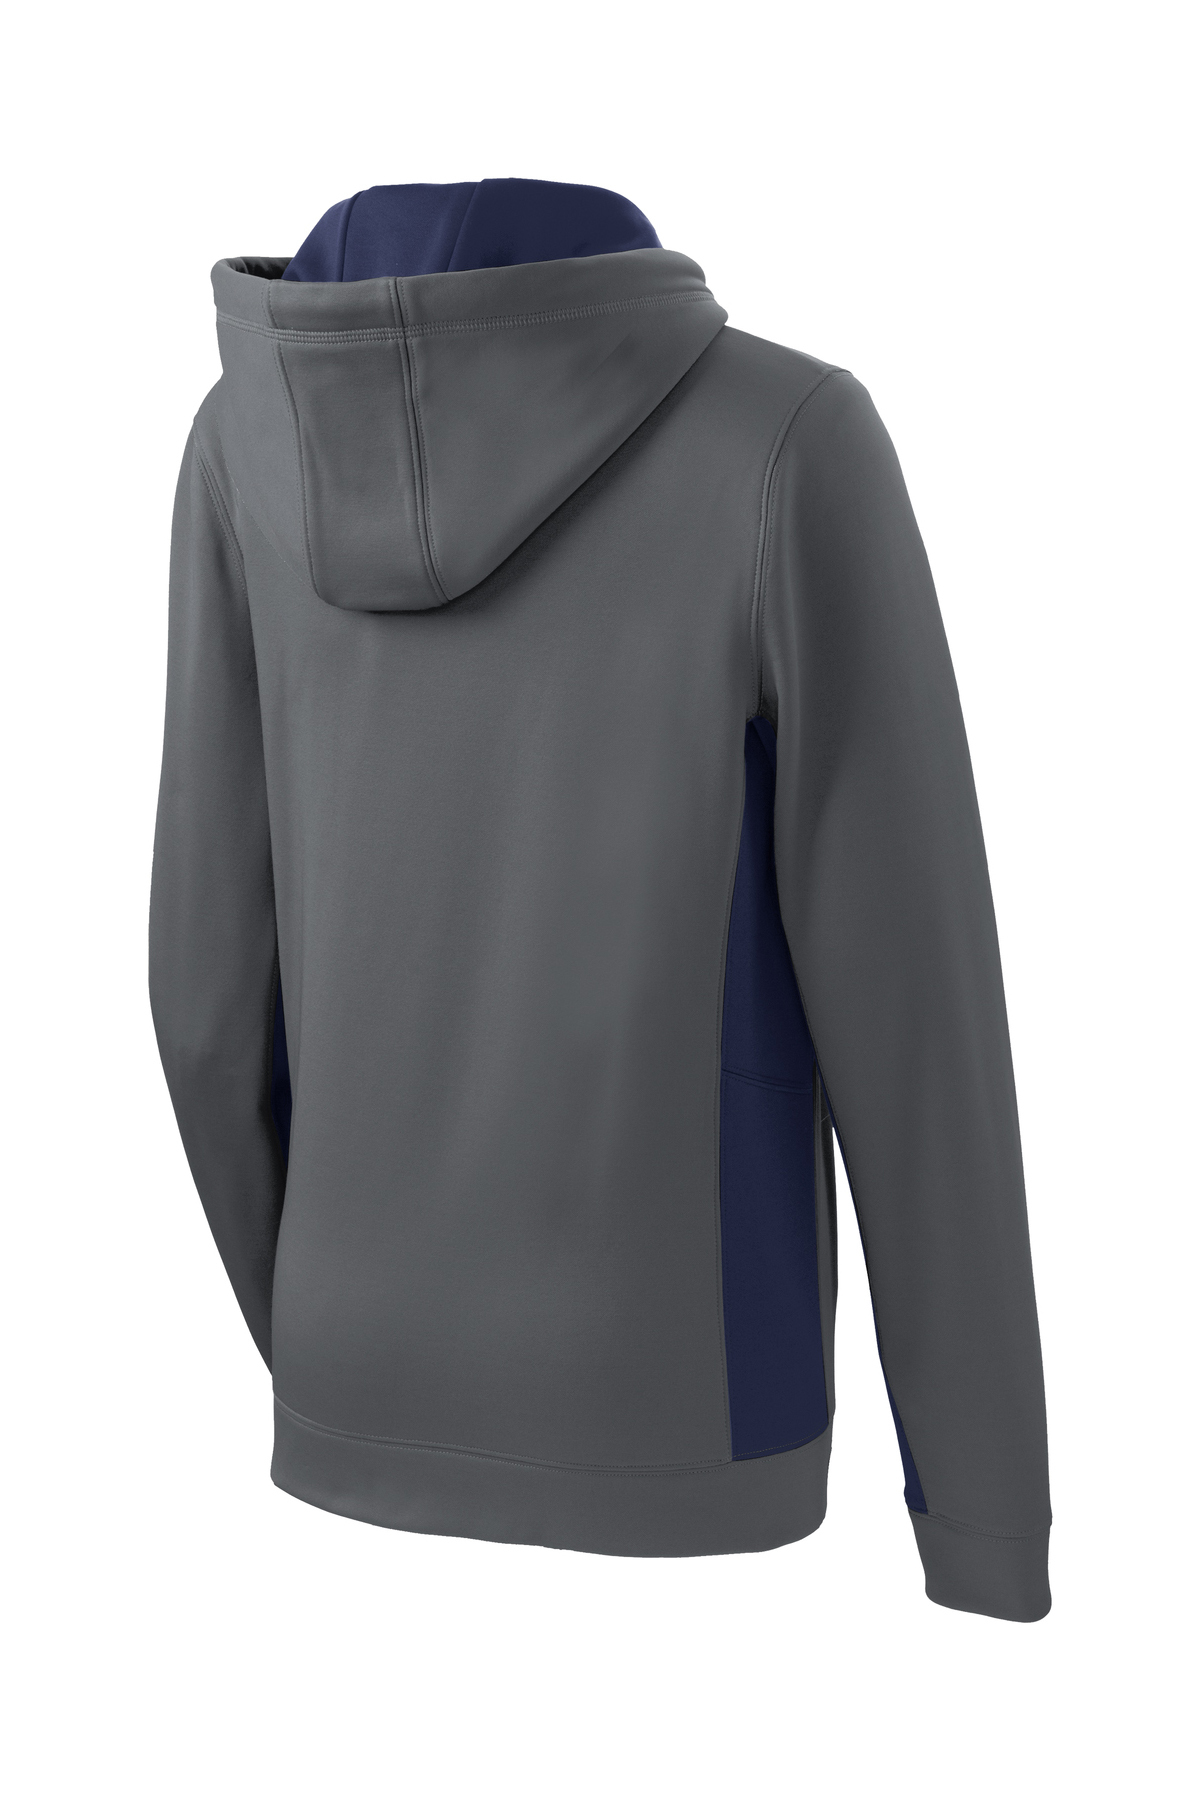 Sport-Tek Ladies Sport-Wick Fleece Colorblock Hooded Pullover | Product ...